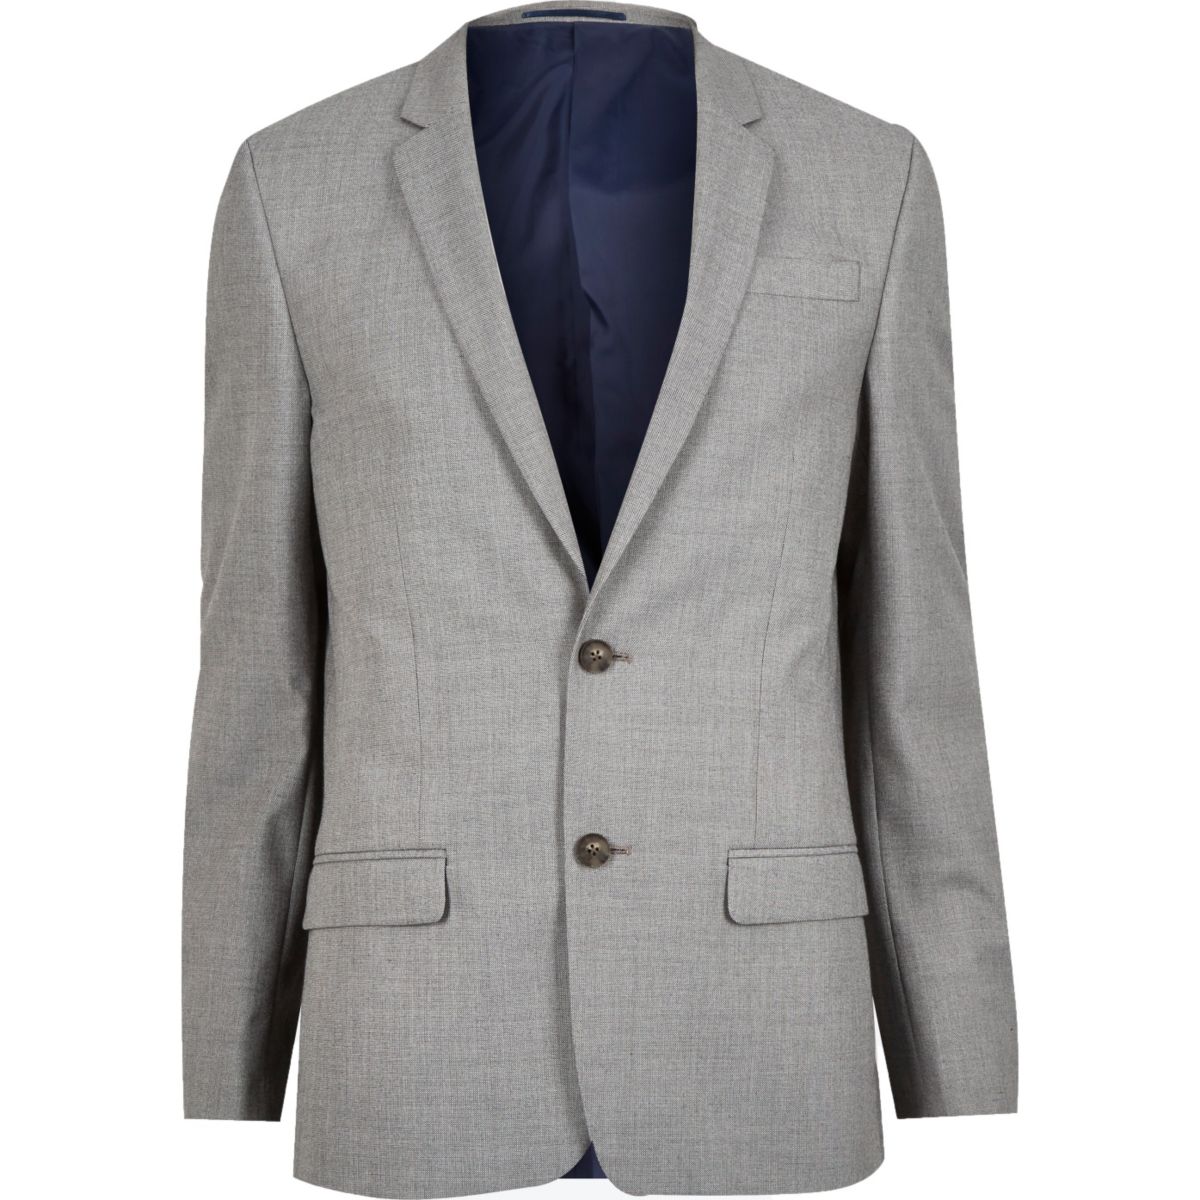 Light grey single breasted vest - Suits - Sale - men